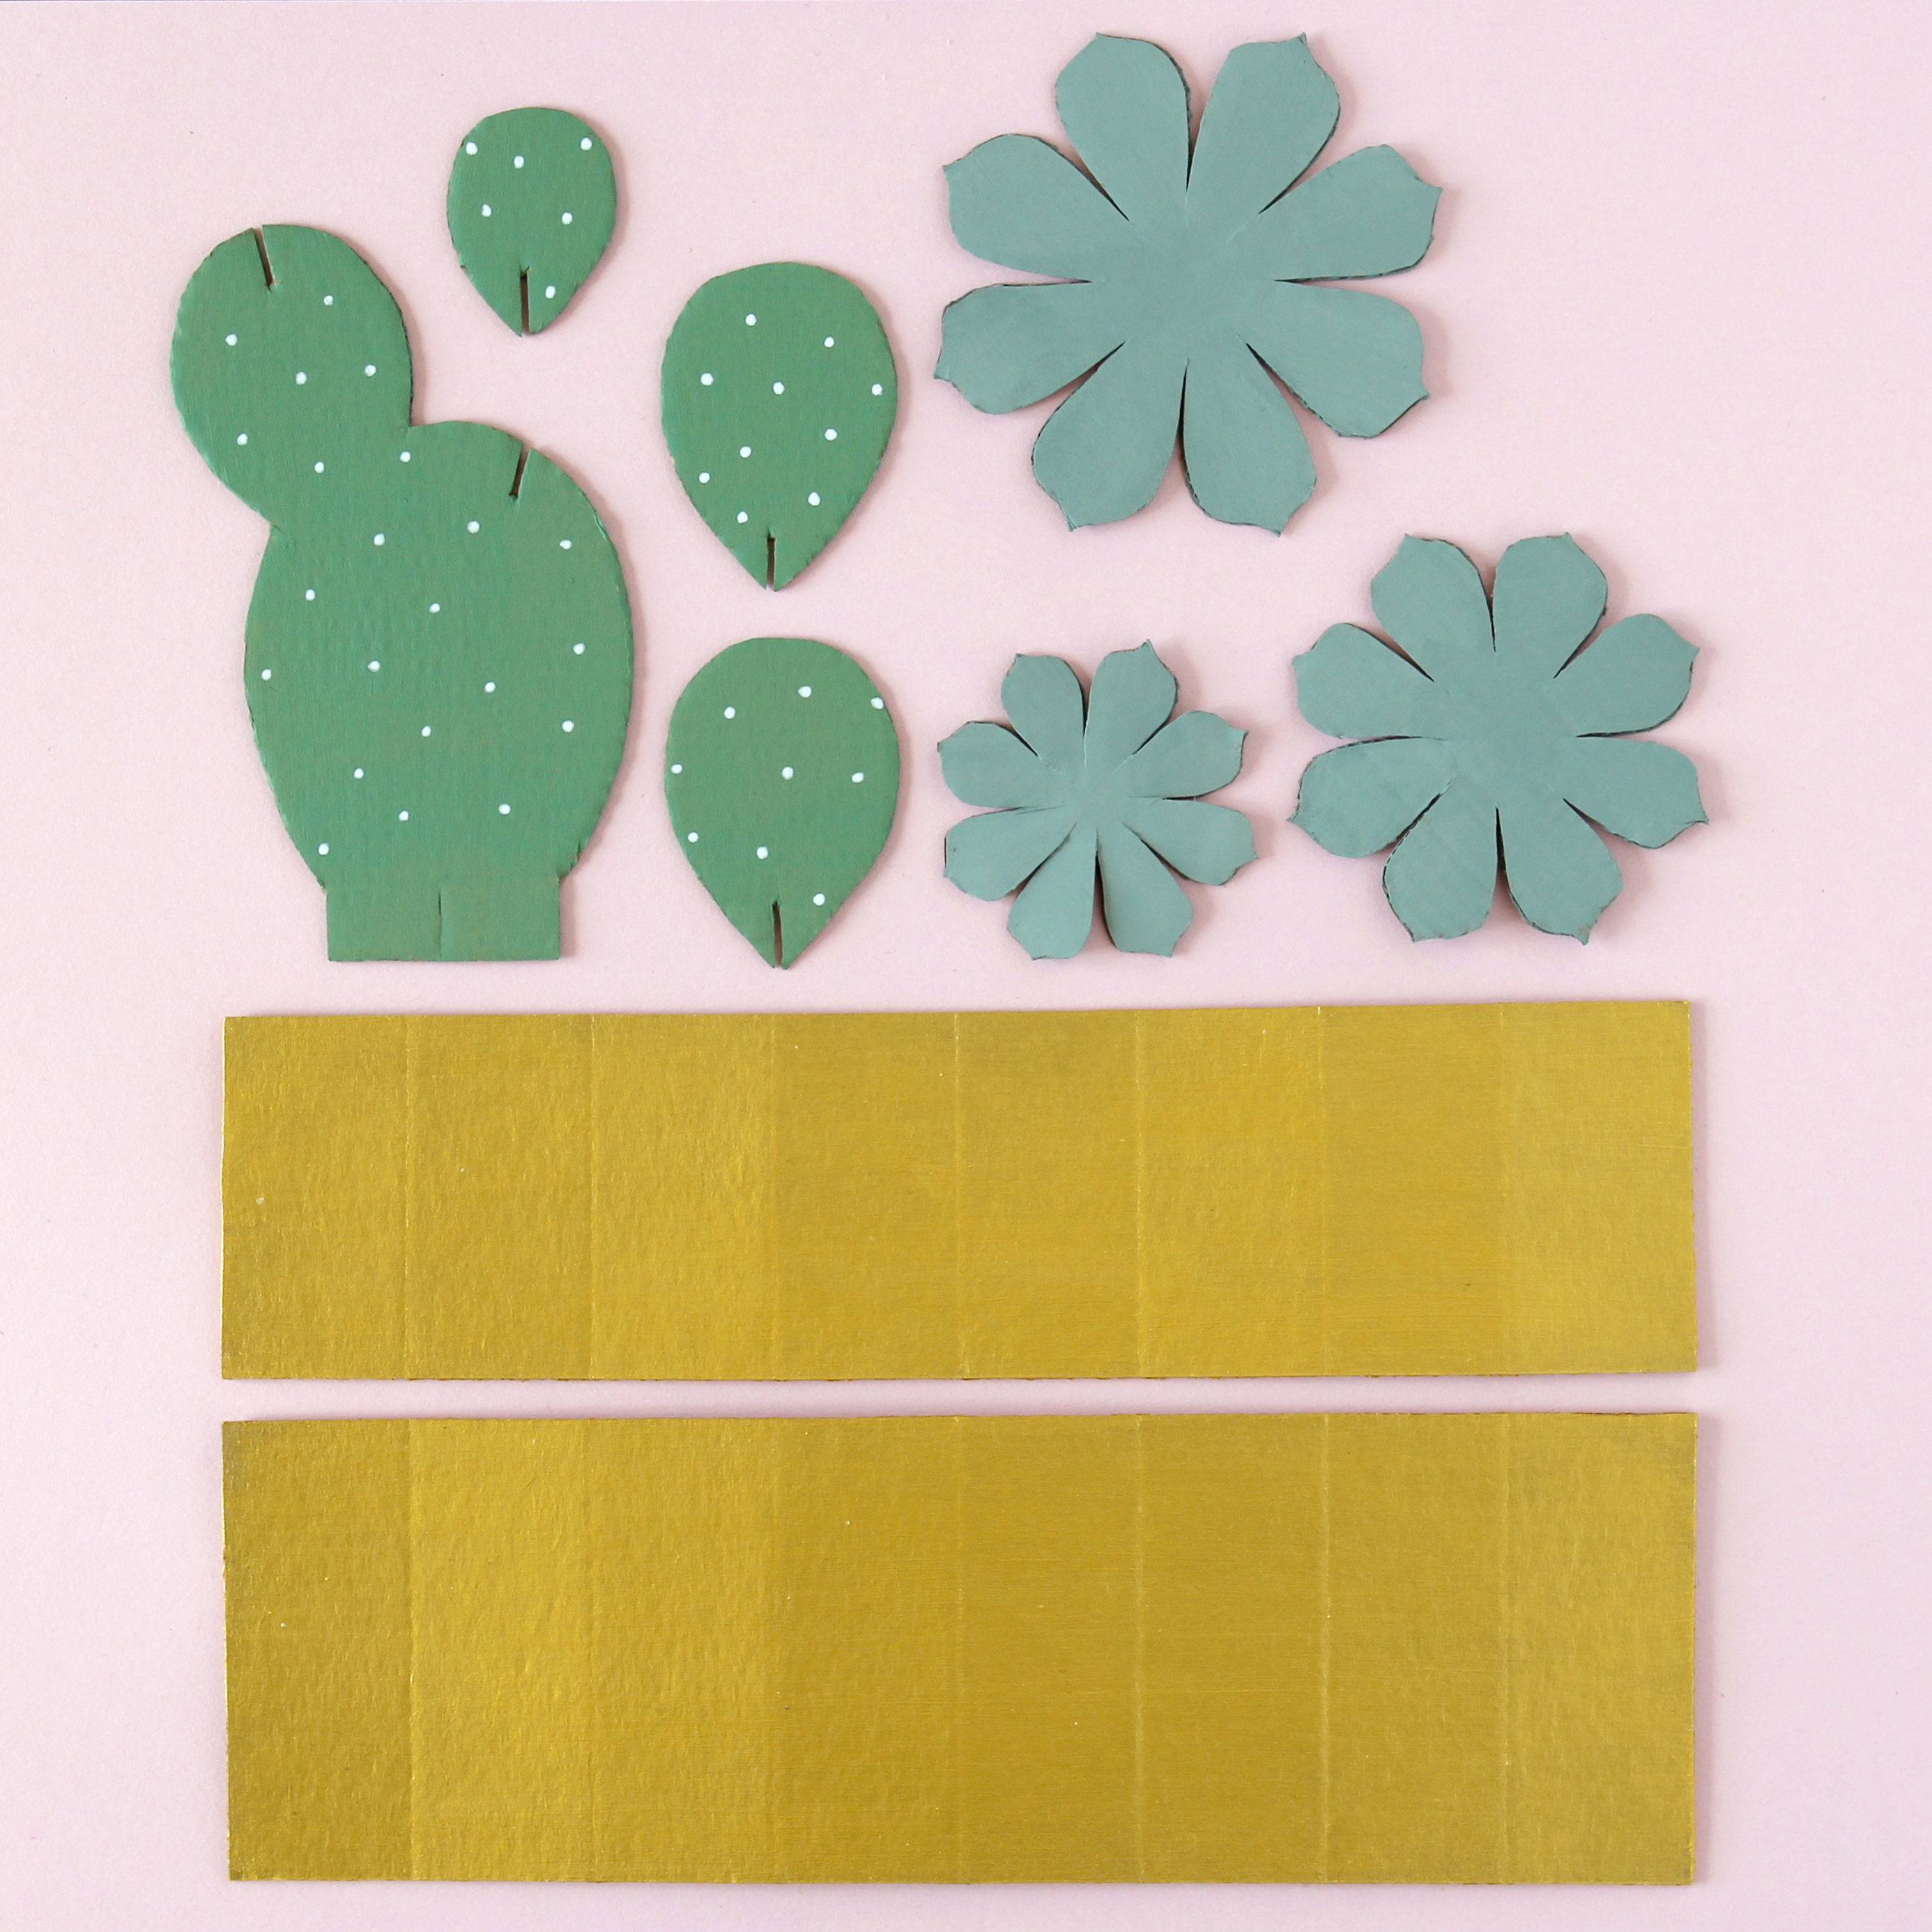 DIY Cardboard Paper Cactus and Succulents